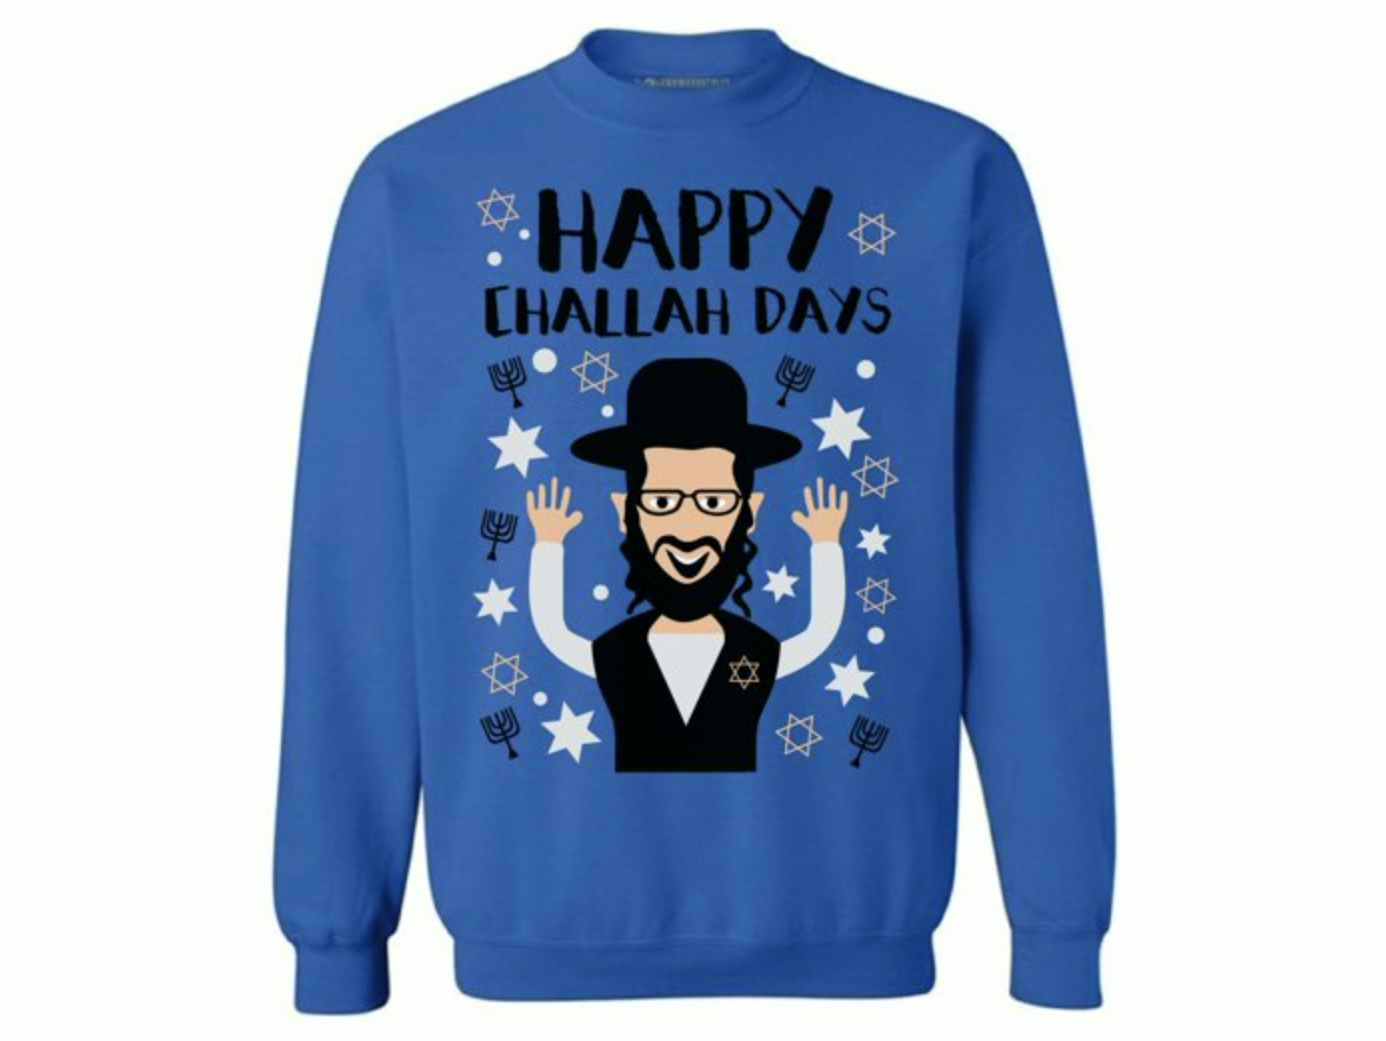 Hanukkah Sweater that reads, "Happy Challah Days